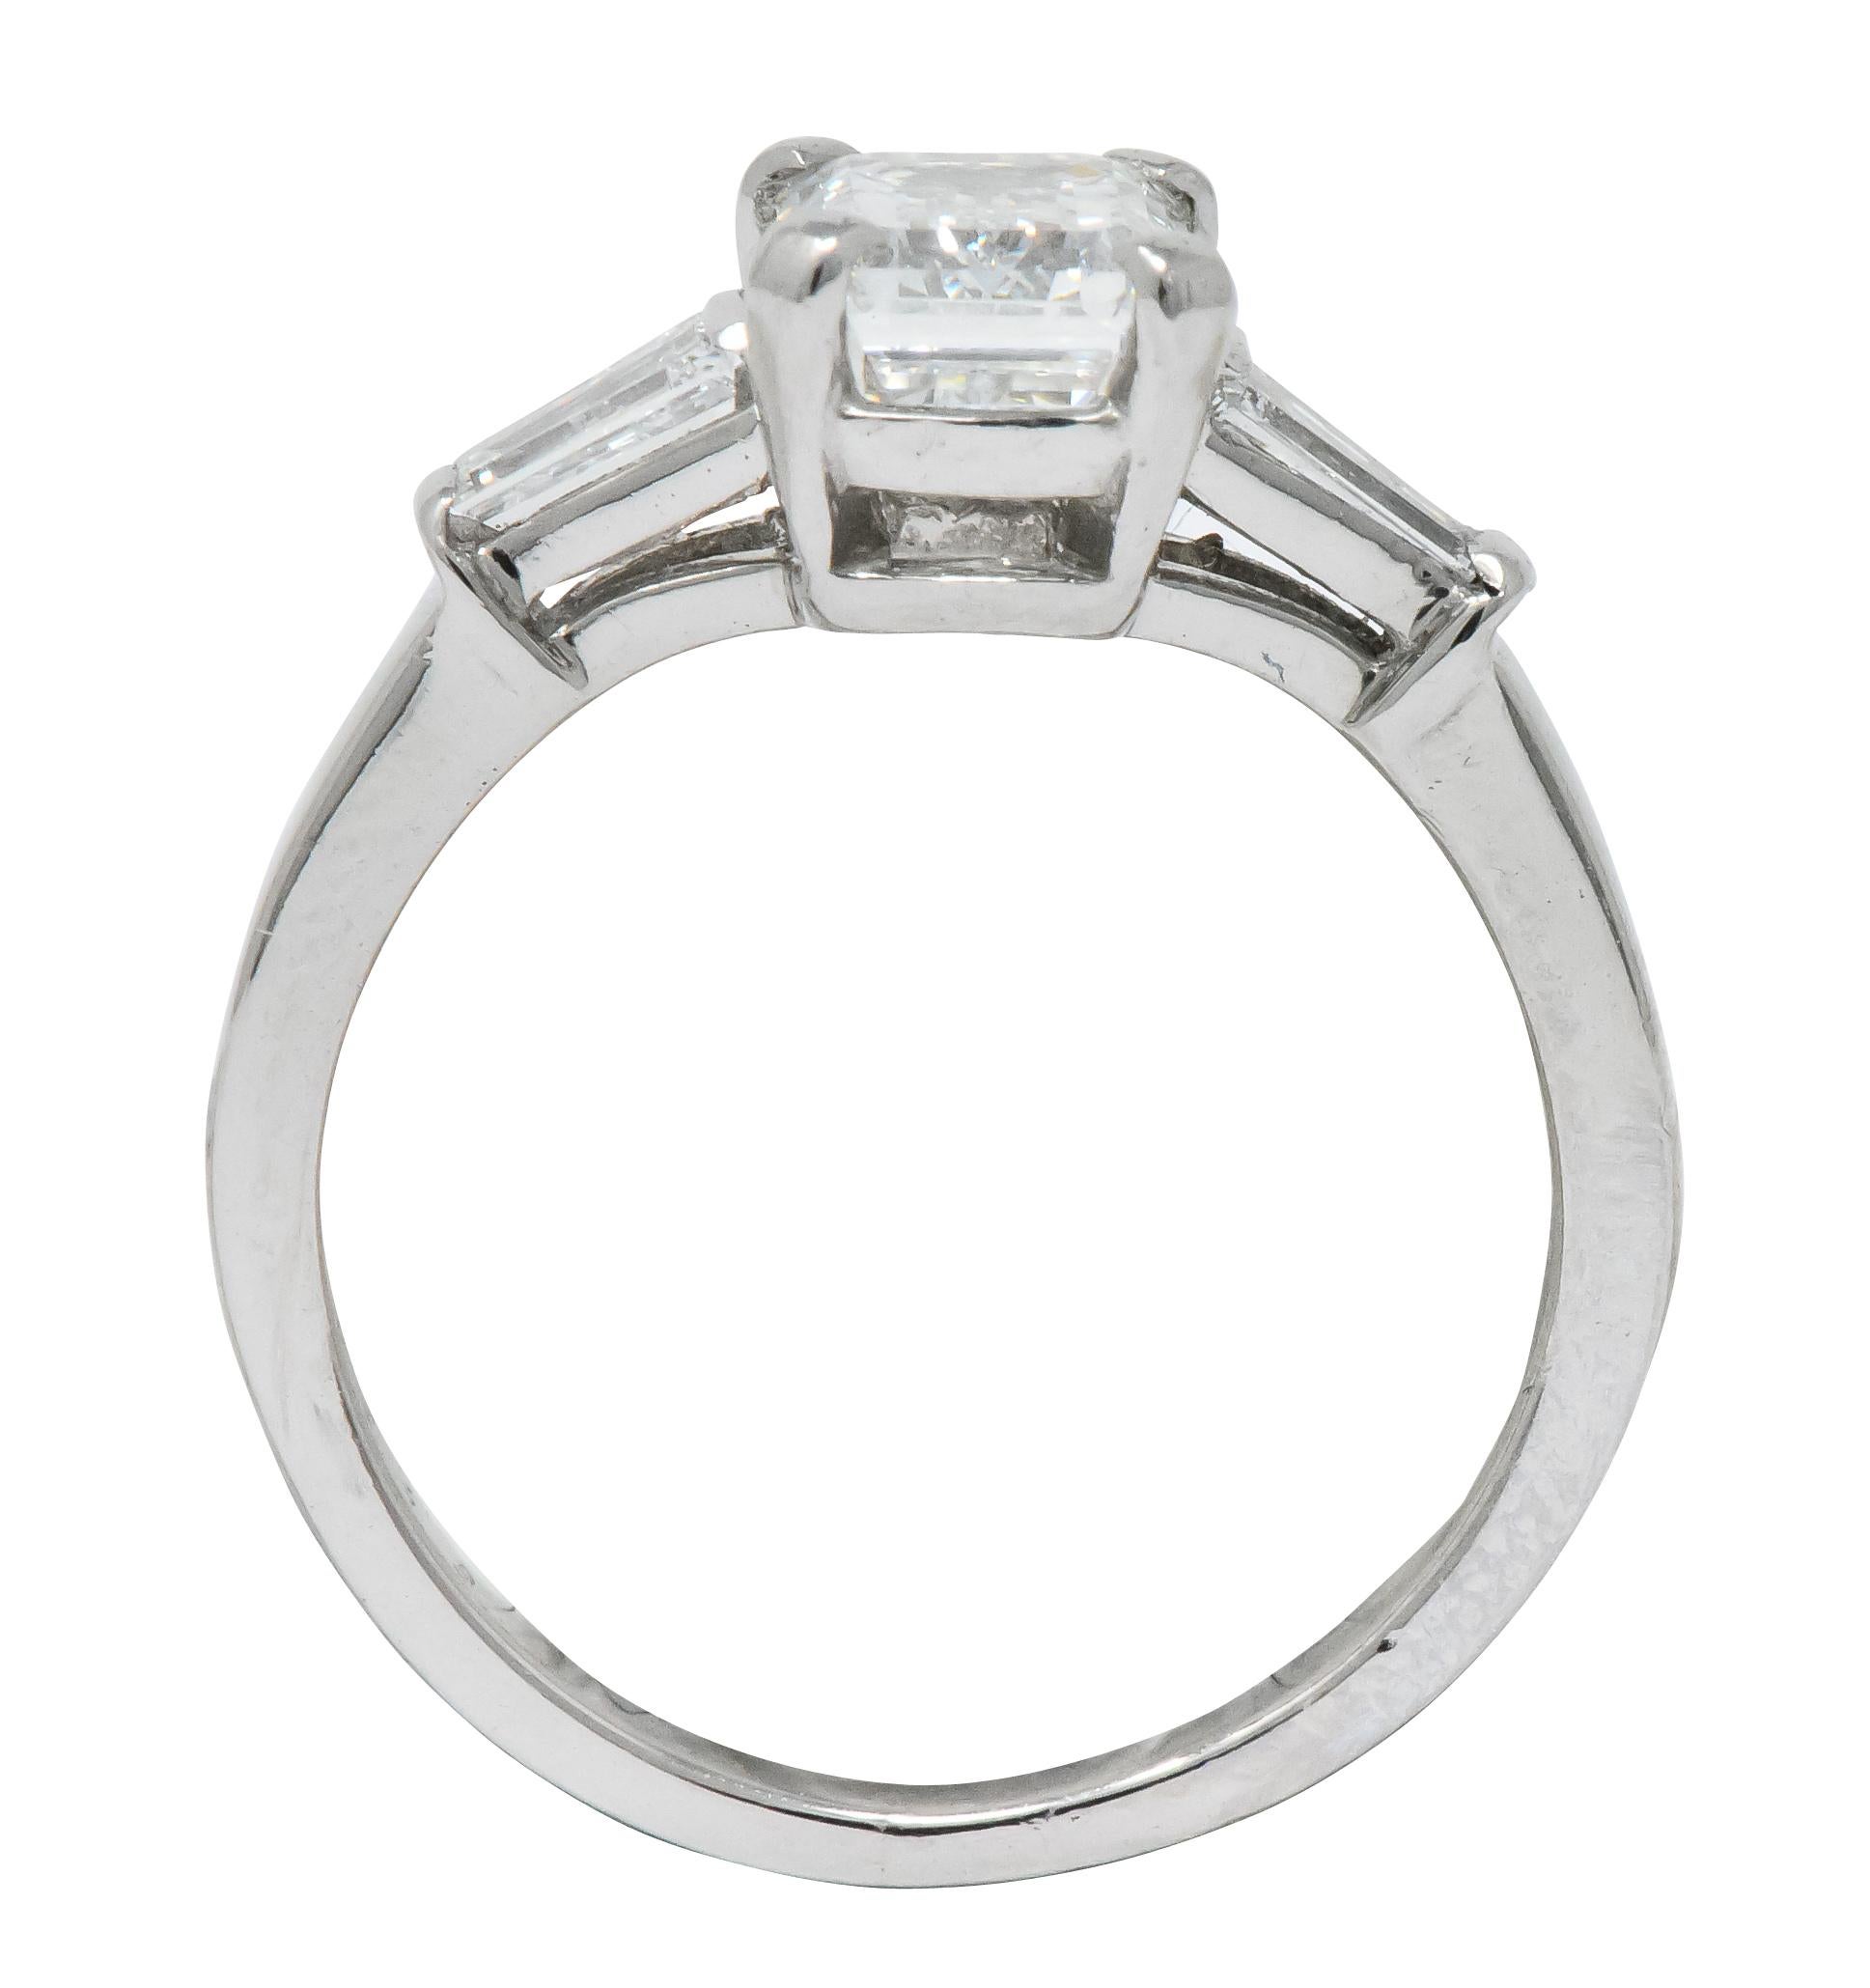 Women's or Men's Bulgari 1.48 Carat Emerald Cut Diamond Platinum Engagement Ring GIA